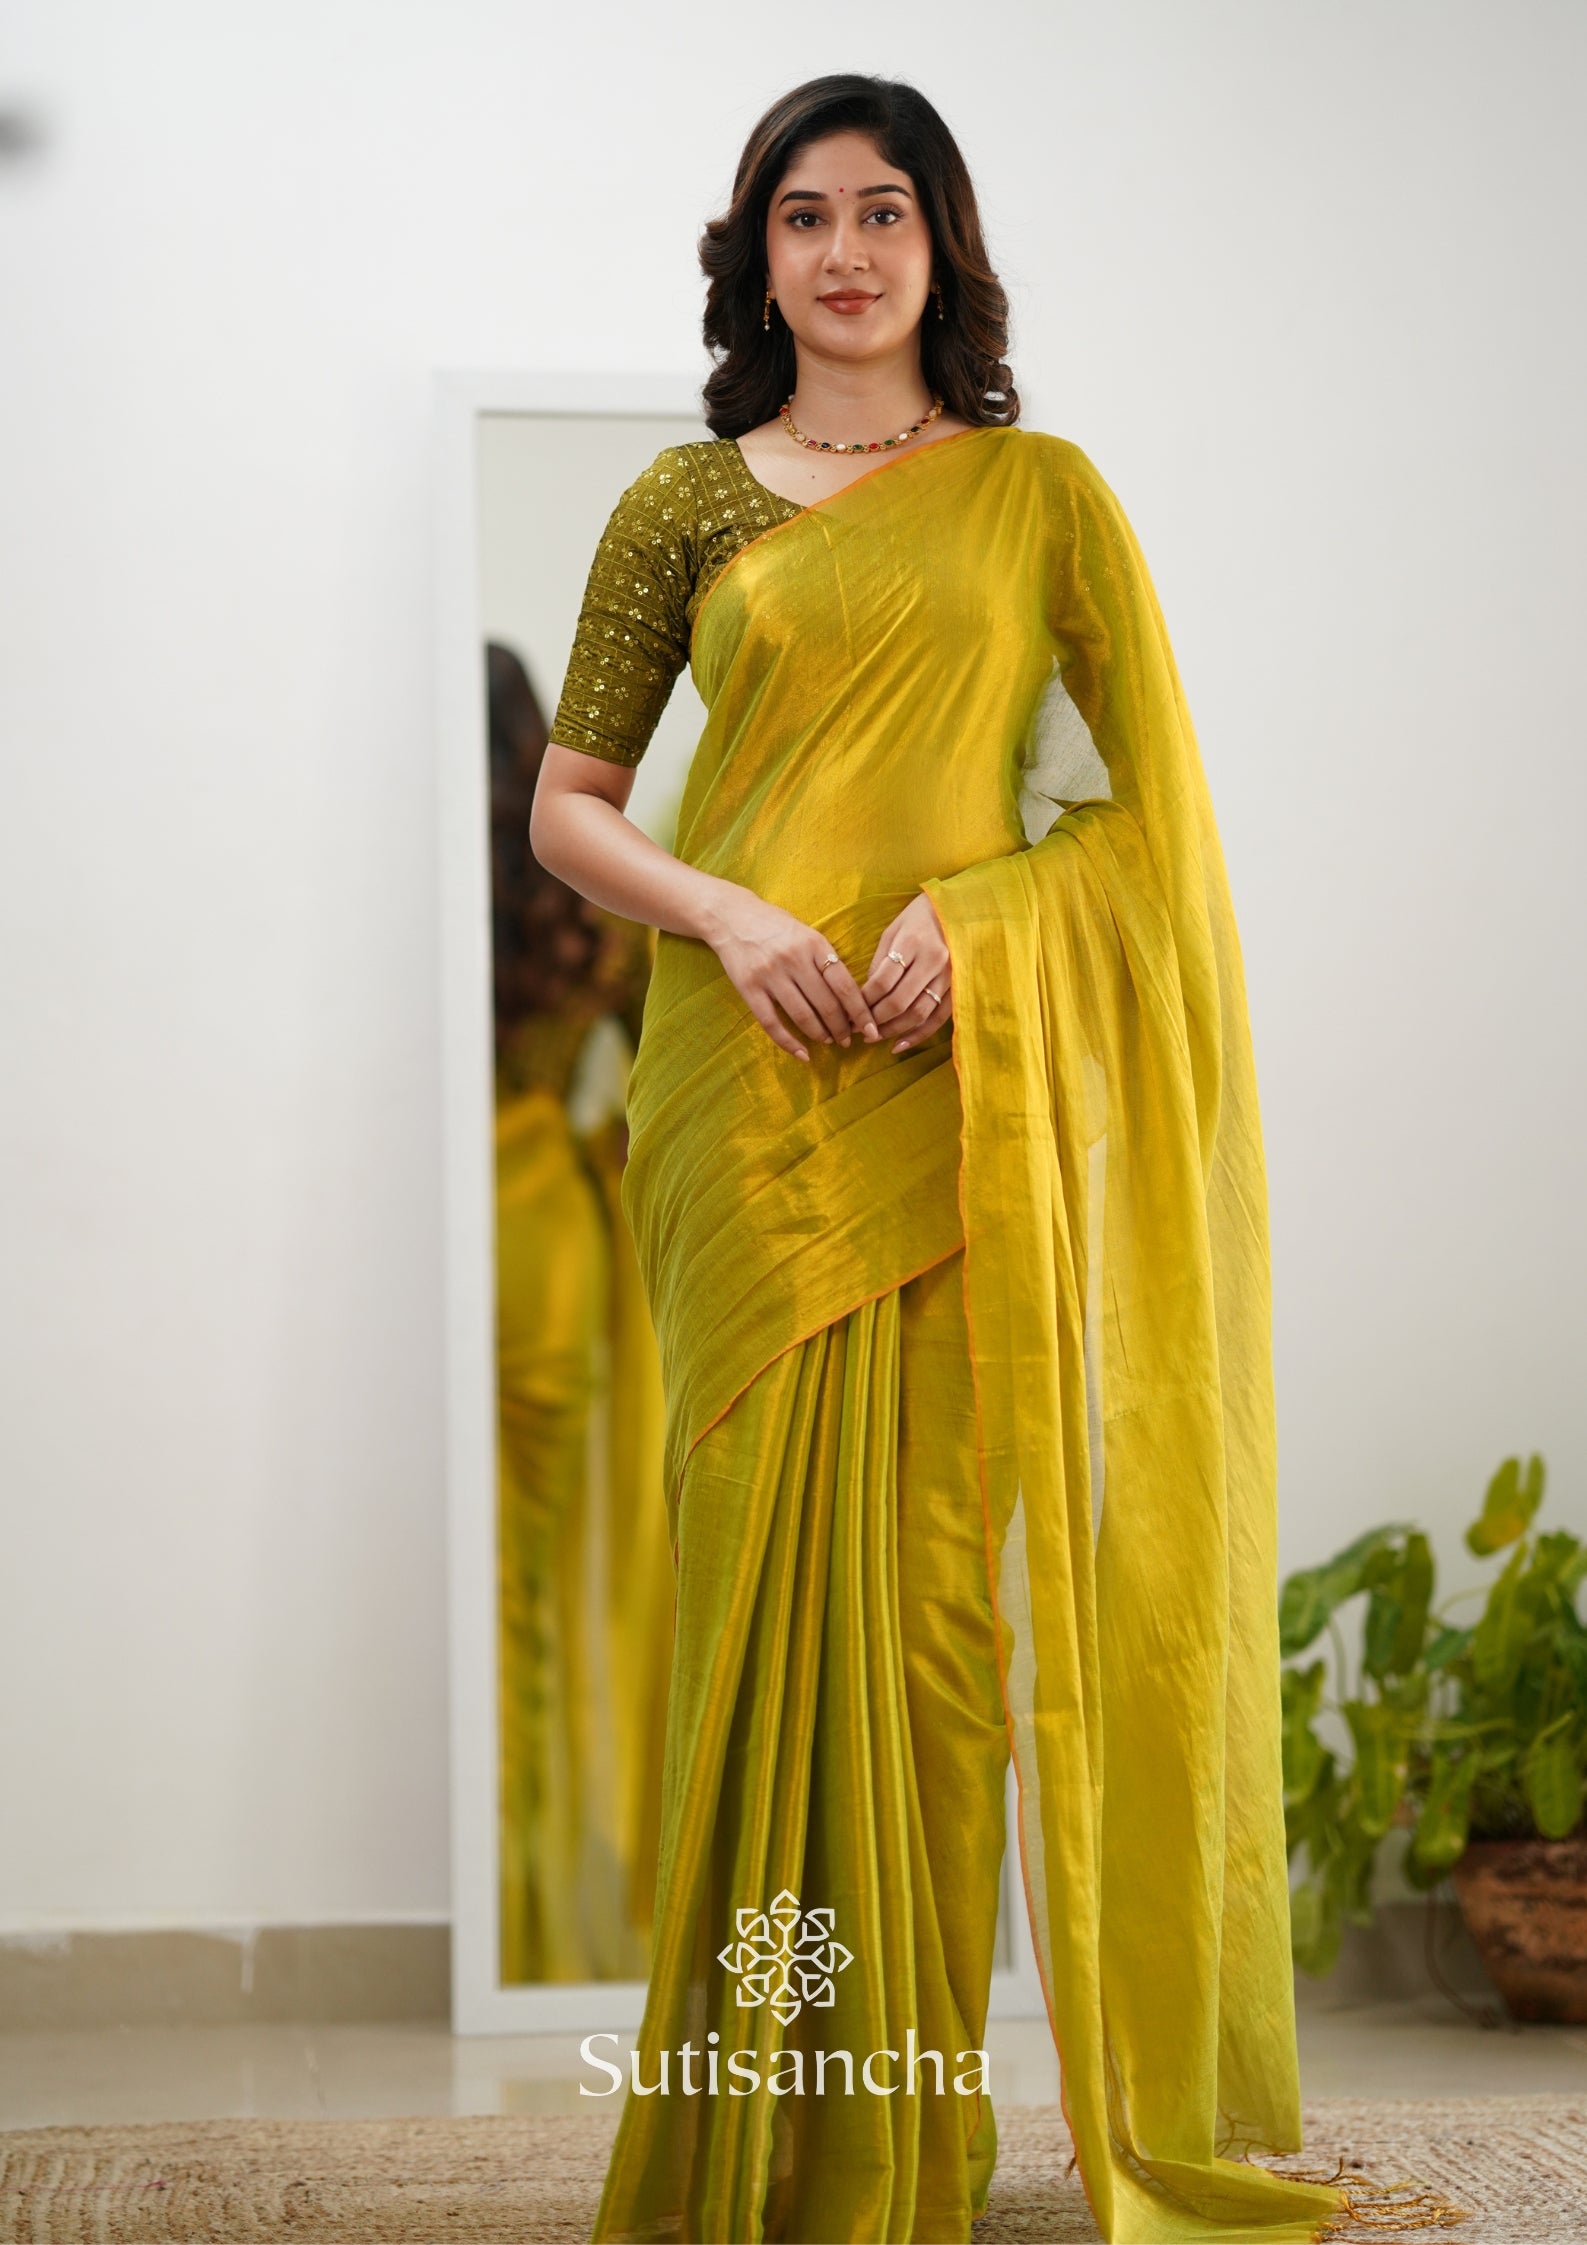 Sutisancha Lime Green Handloom Tissue Saree With Designer Blouse